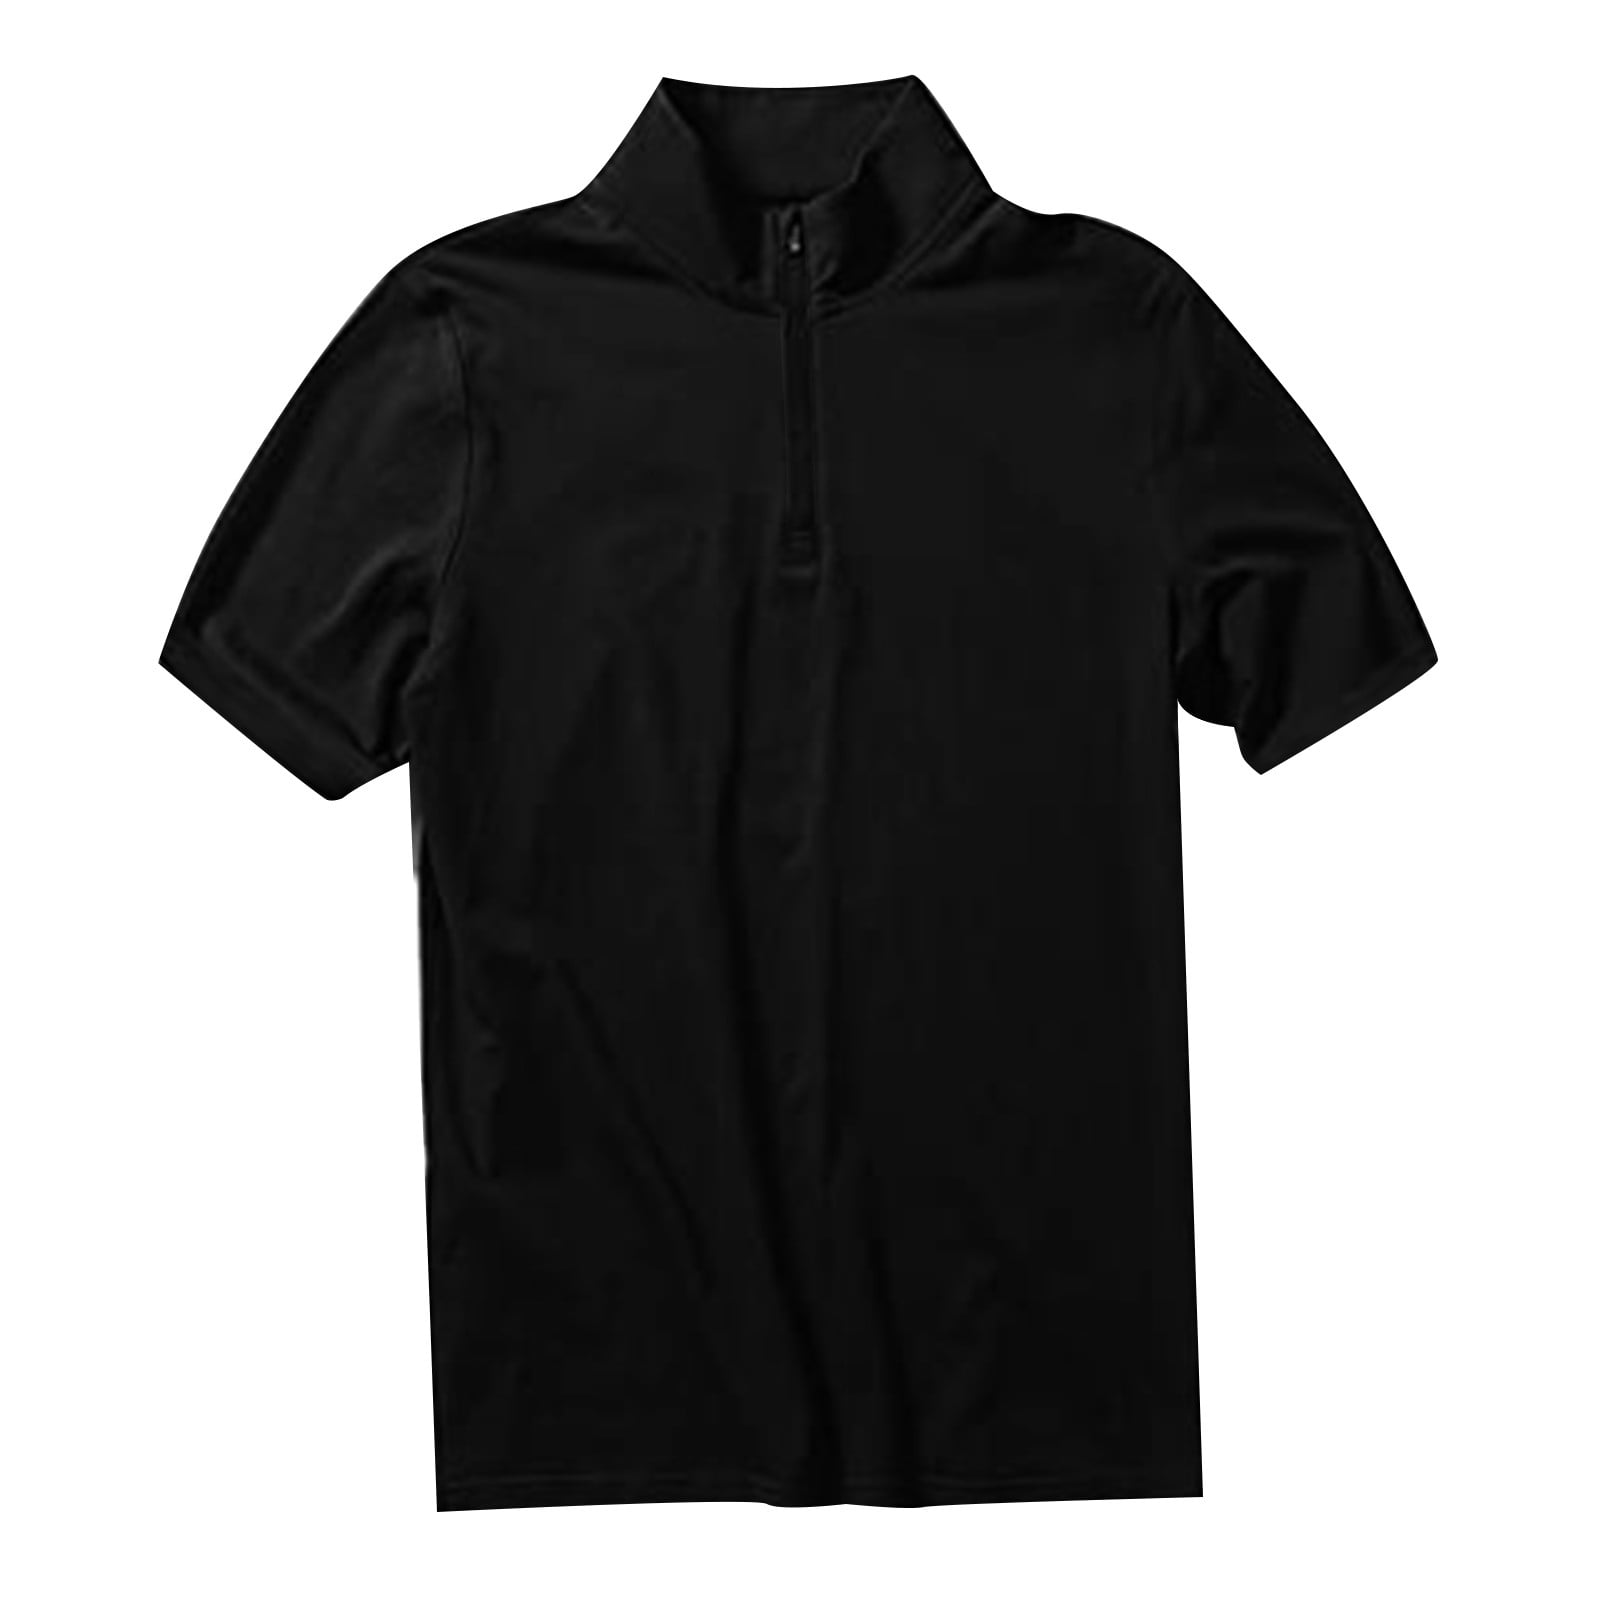 kpoplk Golf Shirts for Men Men’s Short Sleeve Polo Shirts Quick Dry ...